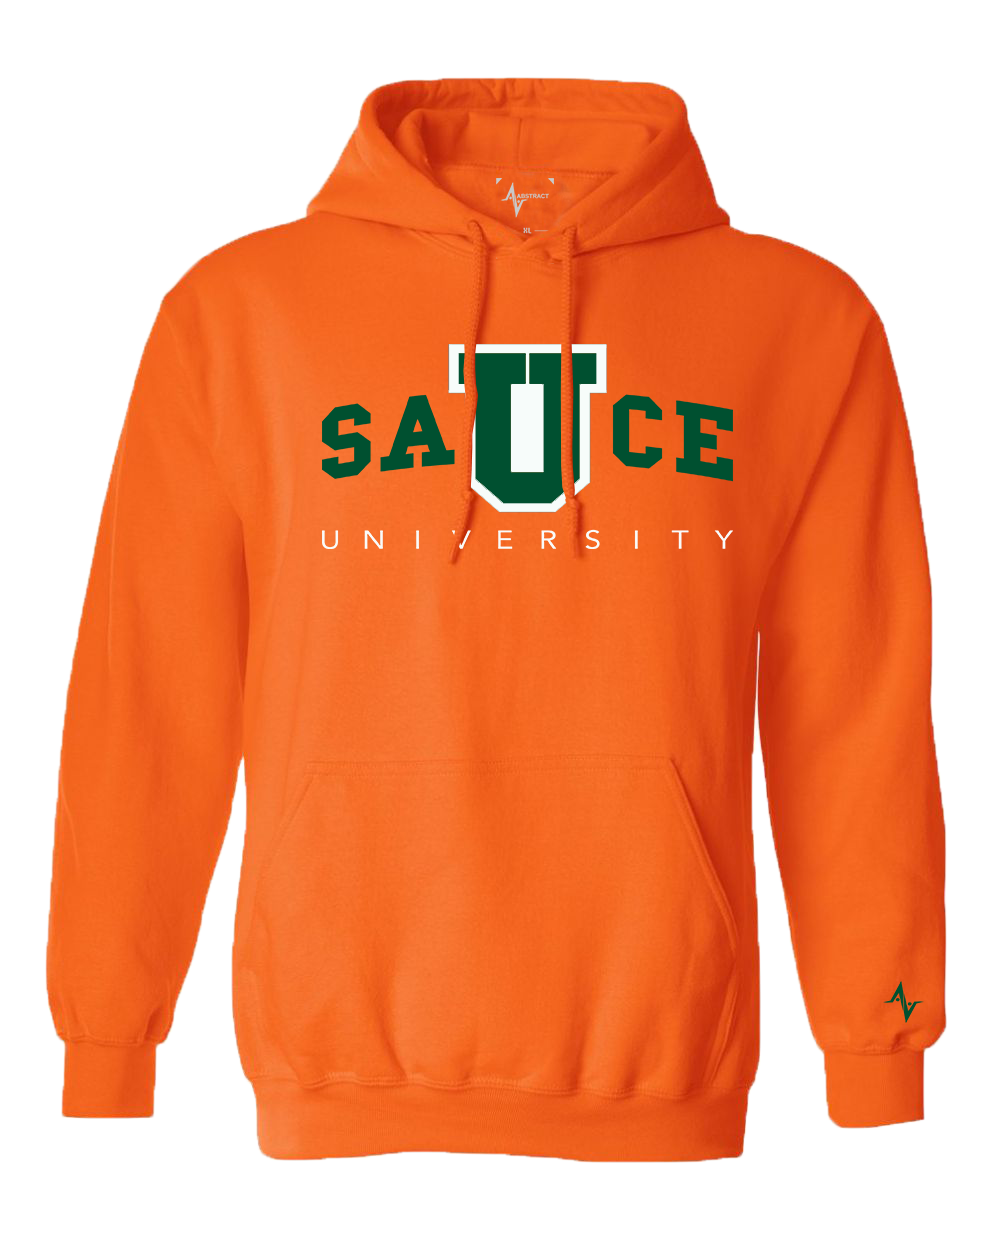 Sauce University Orange Hoodie